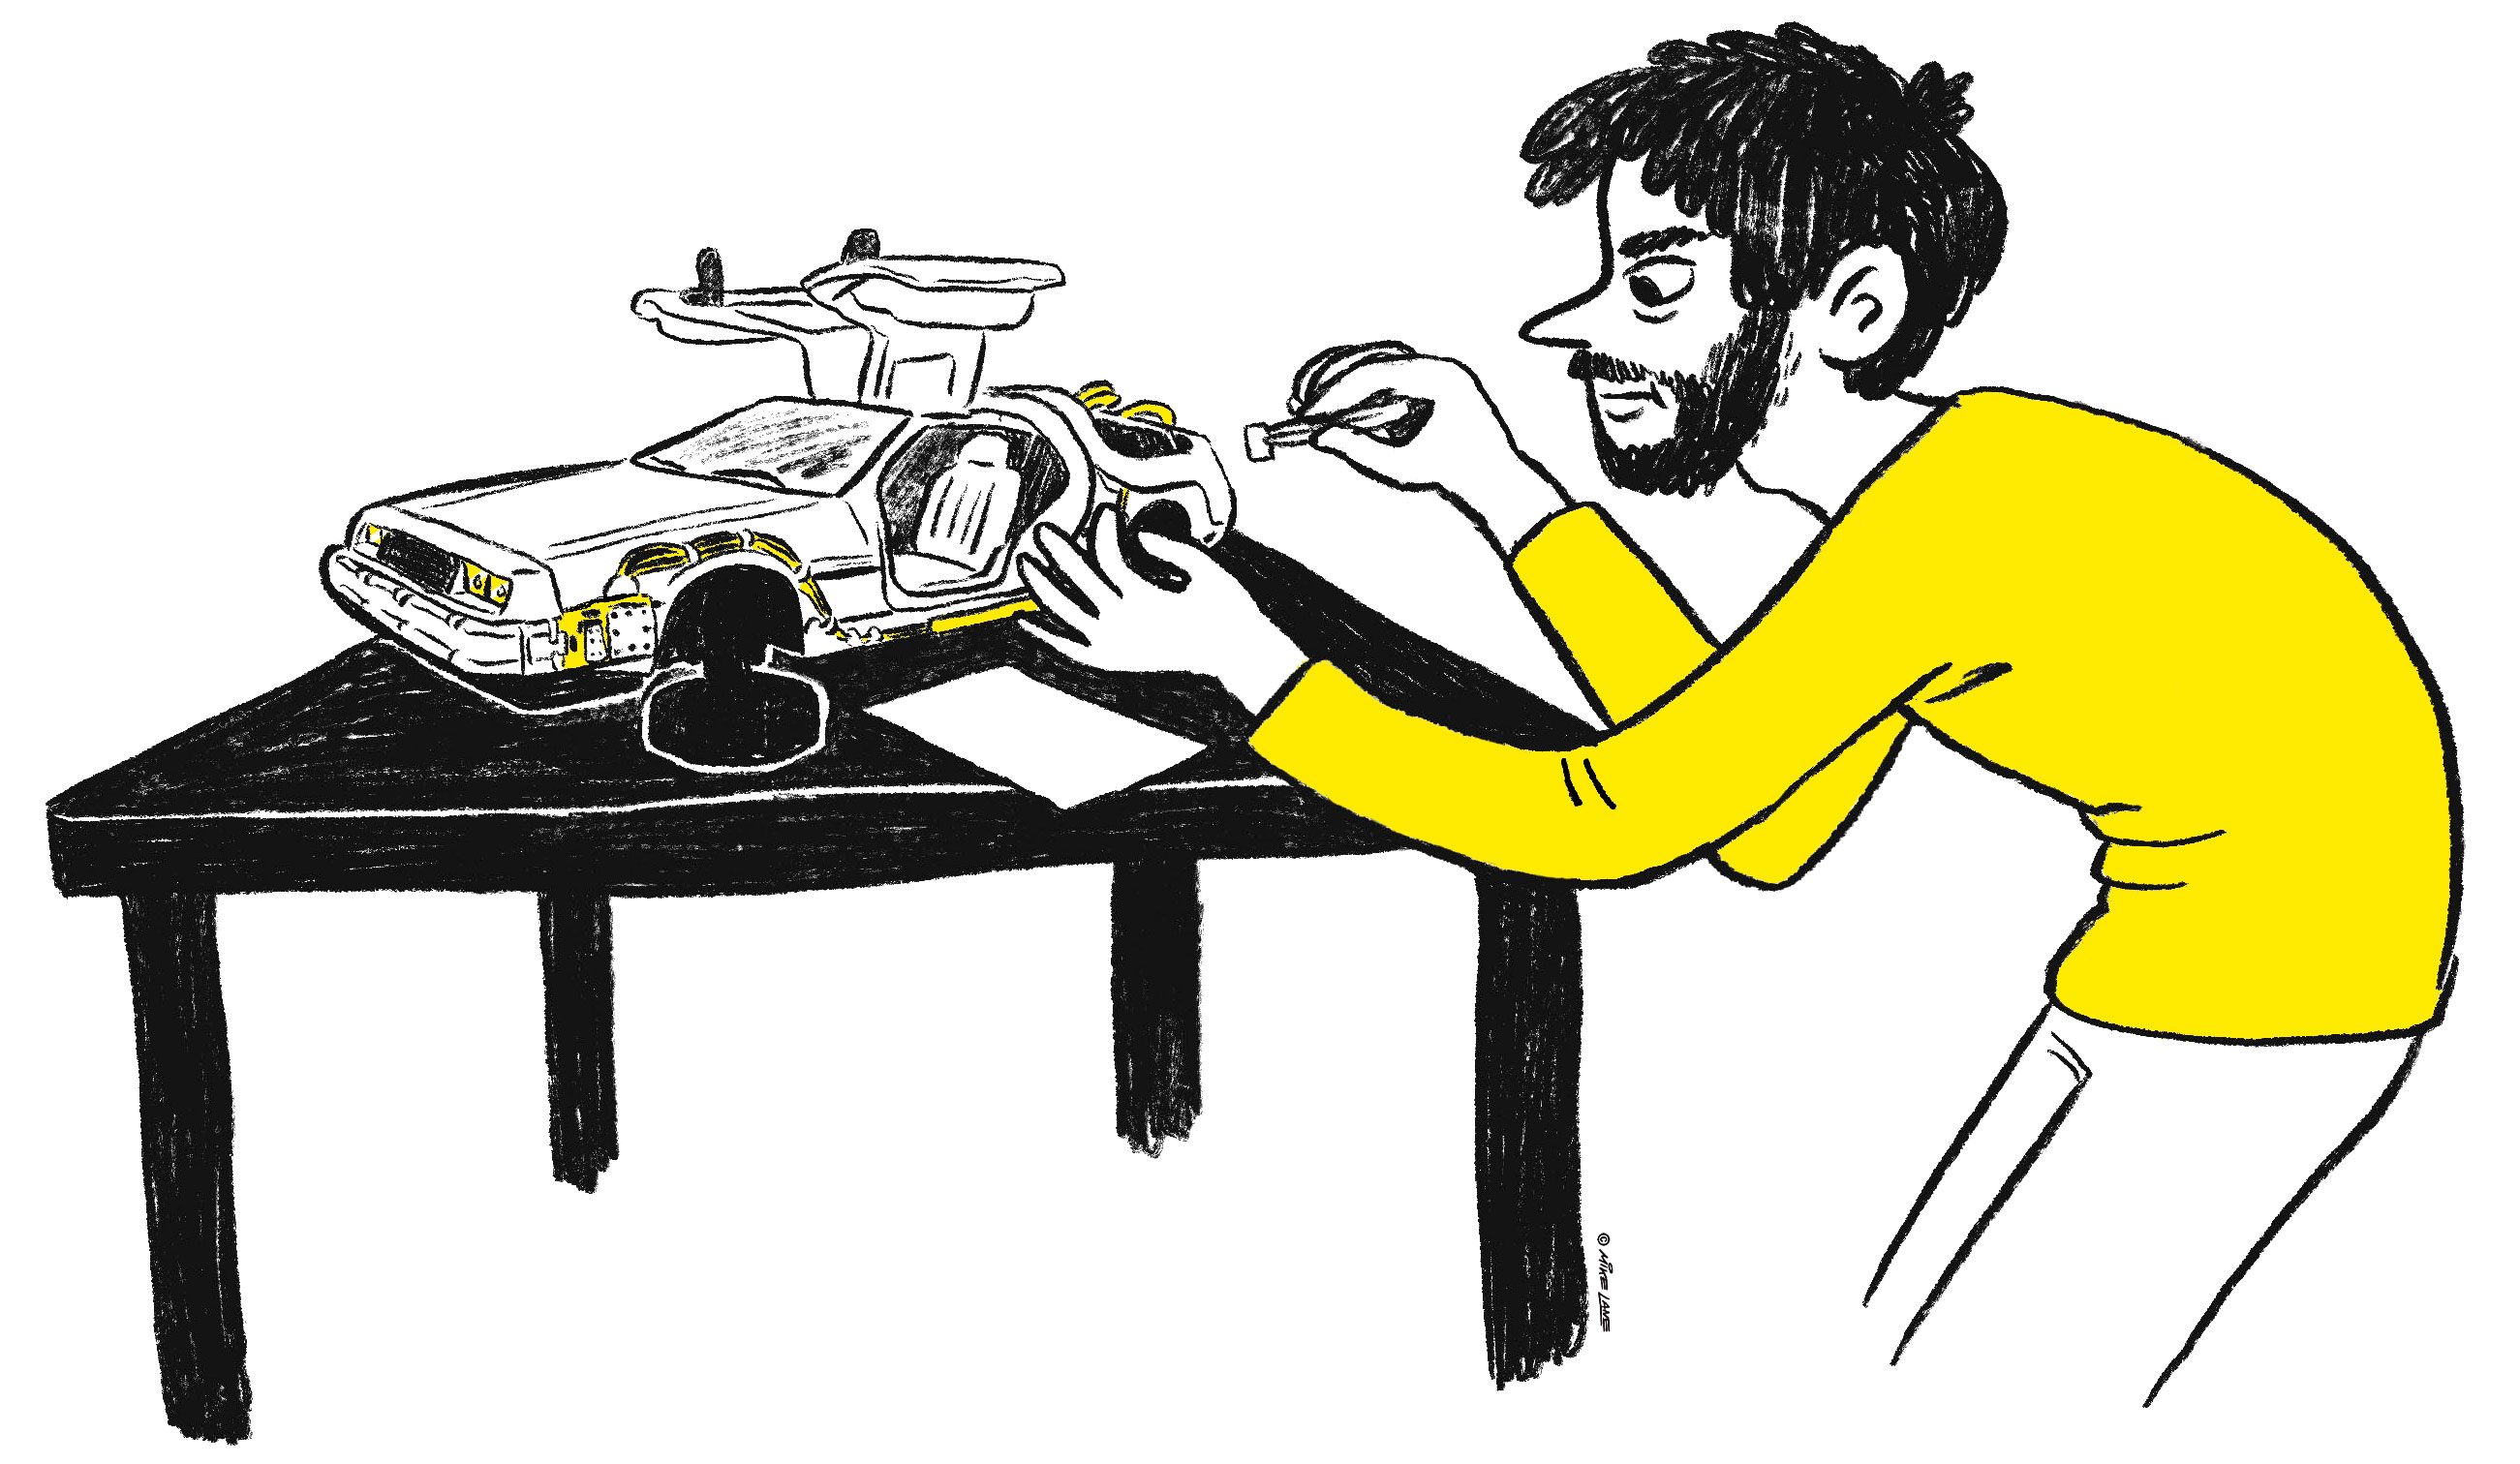 Illustration of Mike Lane modding the DeLorean